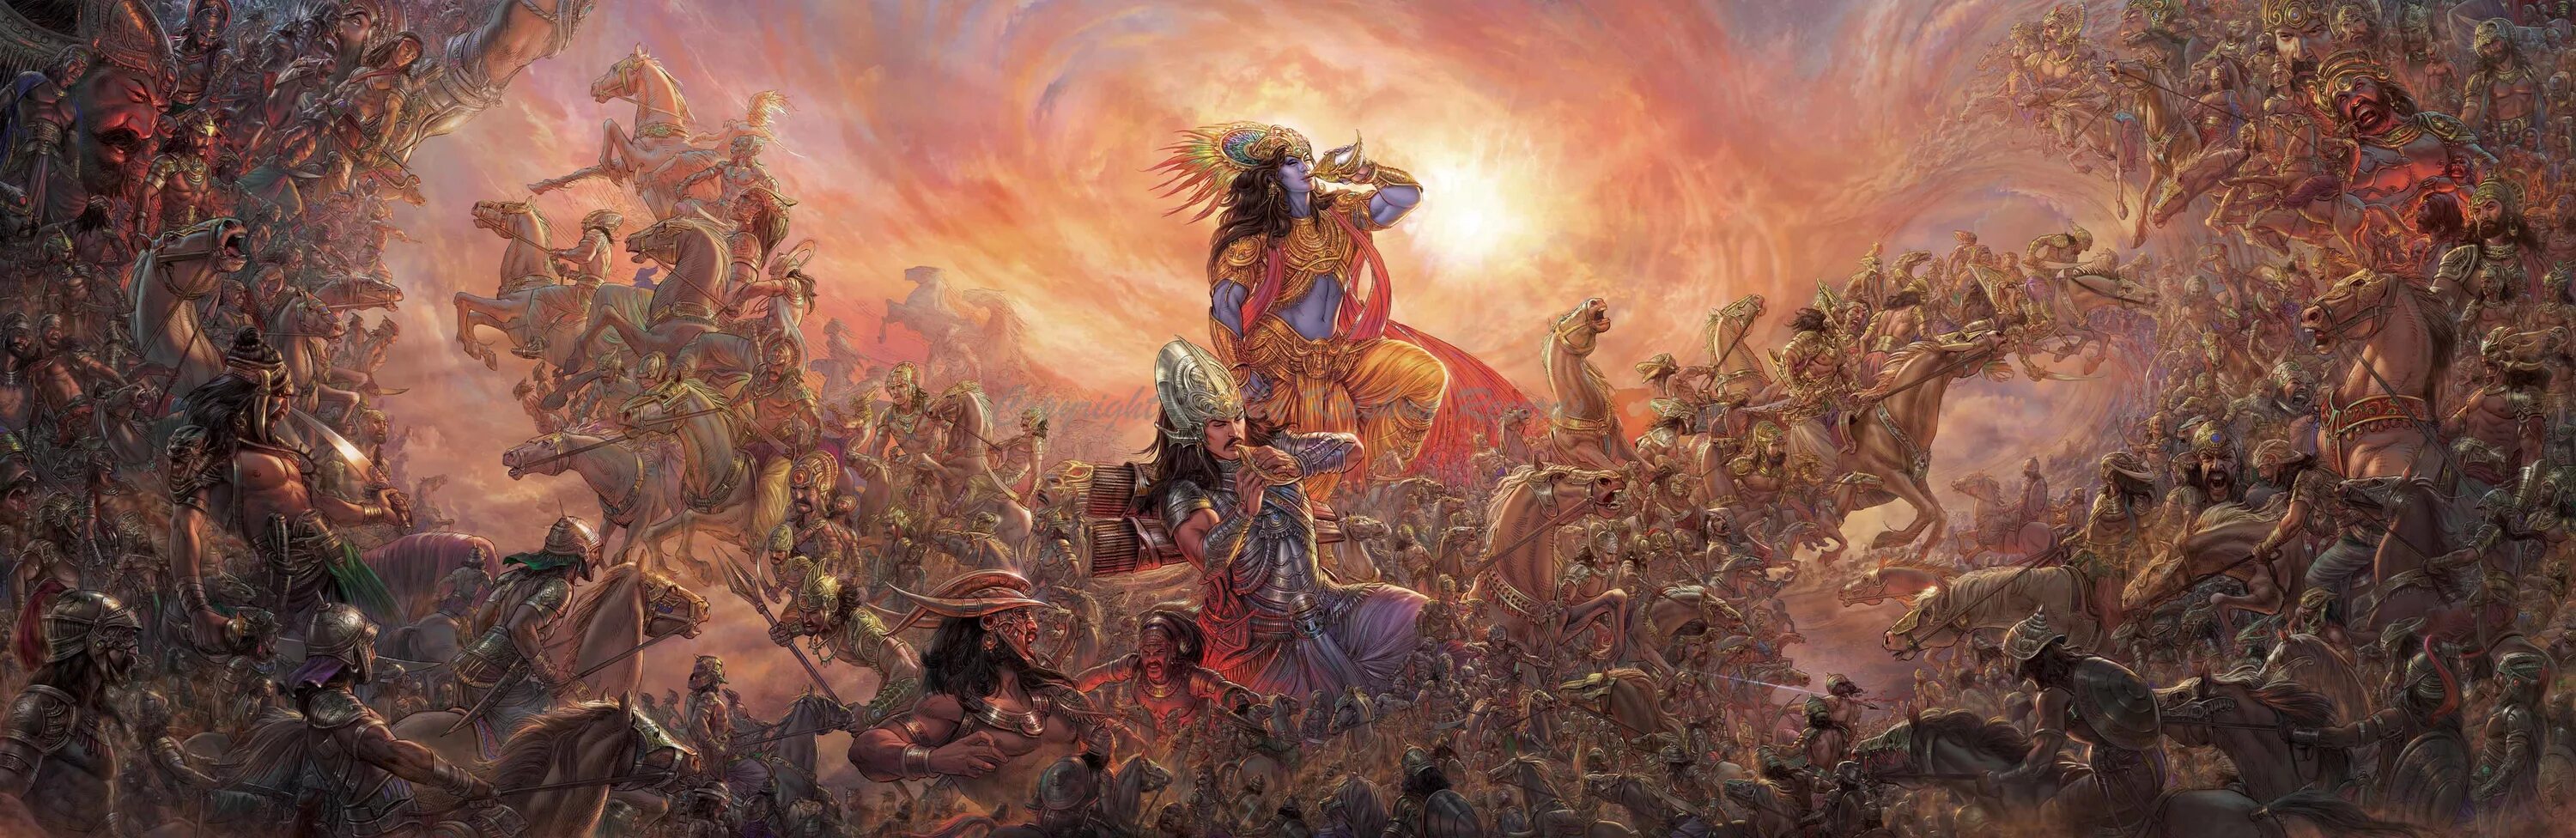 Махабхарата Курукшетра битва. Битва на поле Курукшетра Махабхарата. Махабхарата битва богов. Великая битва Махабхарата.